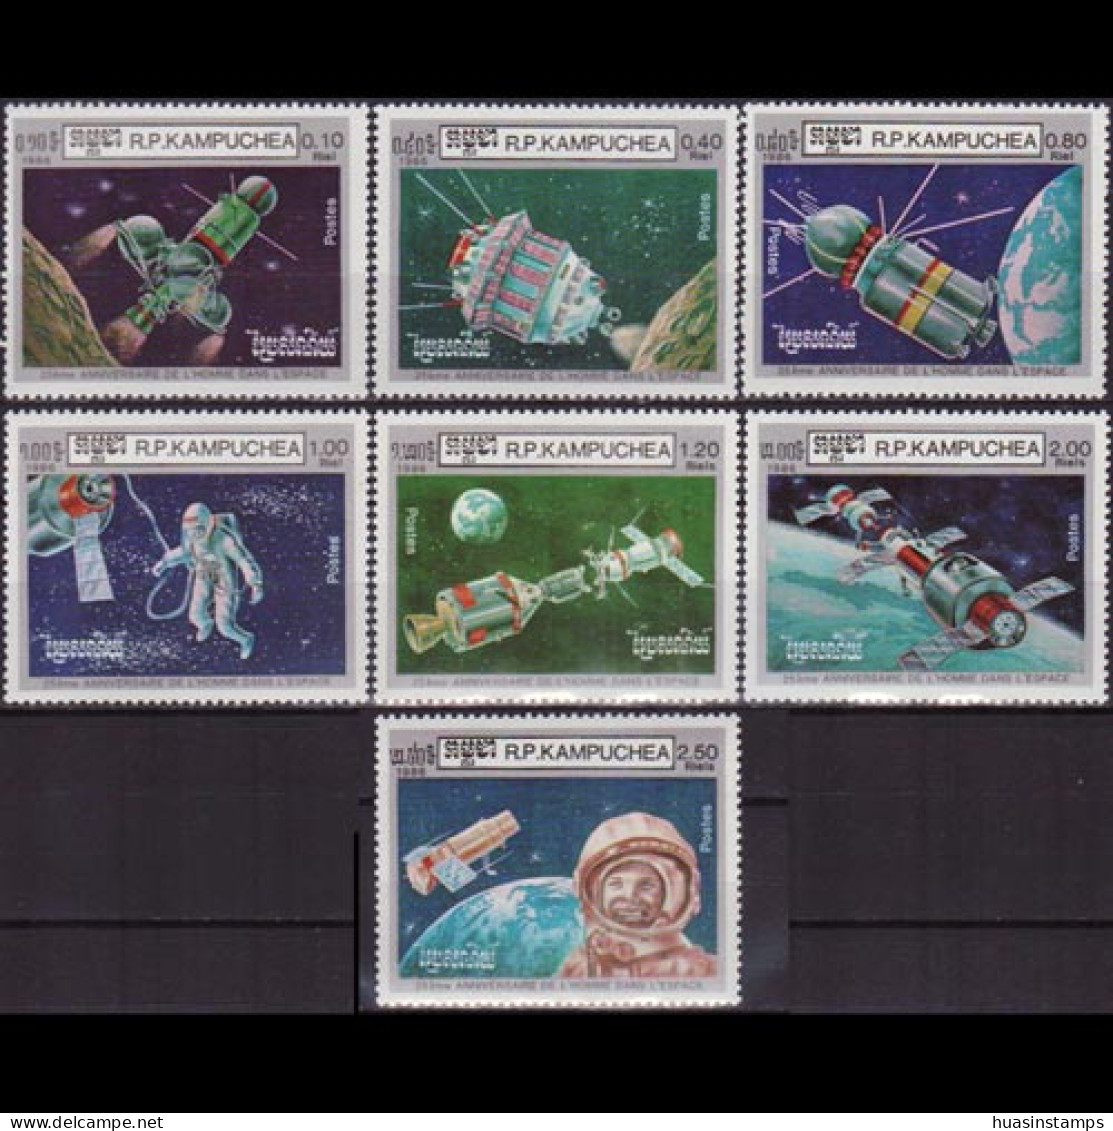 CAMBODIA 1986 - Scott# 670-6 Space Flight Set Of 7 MNH - Cambodia